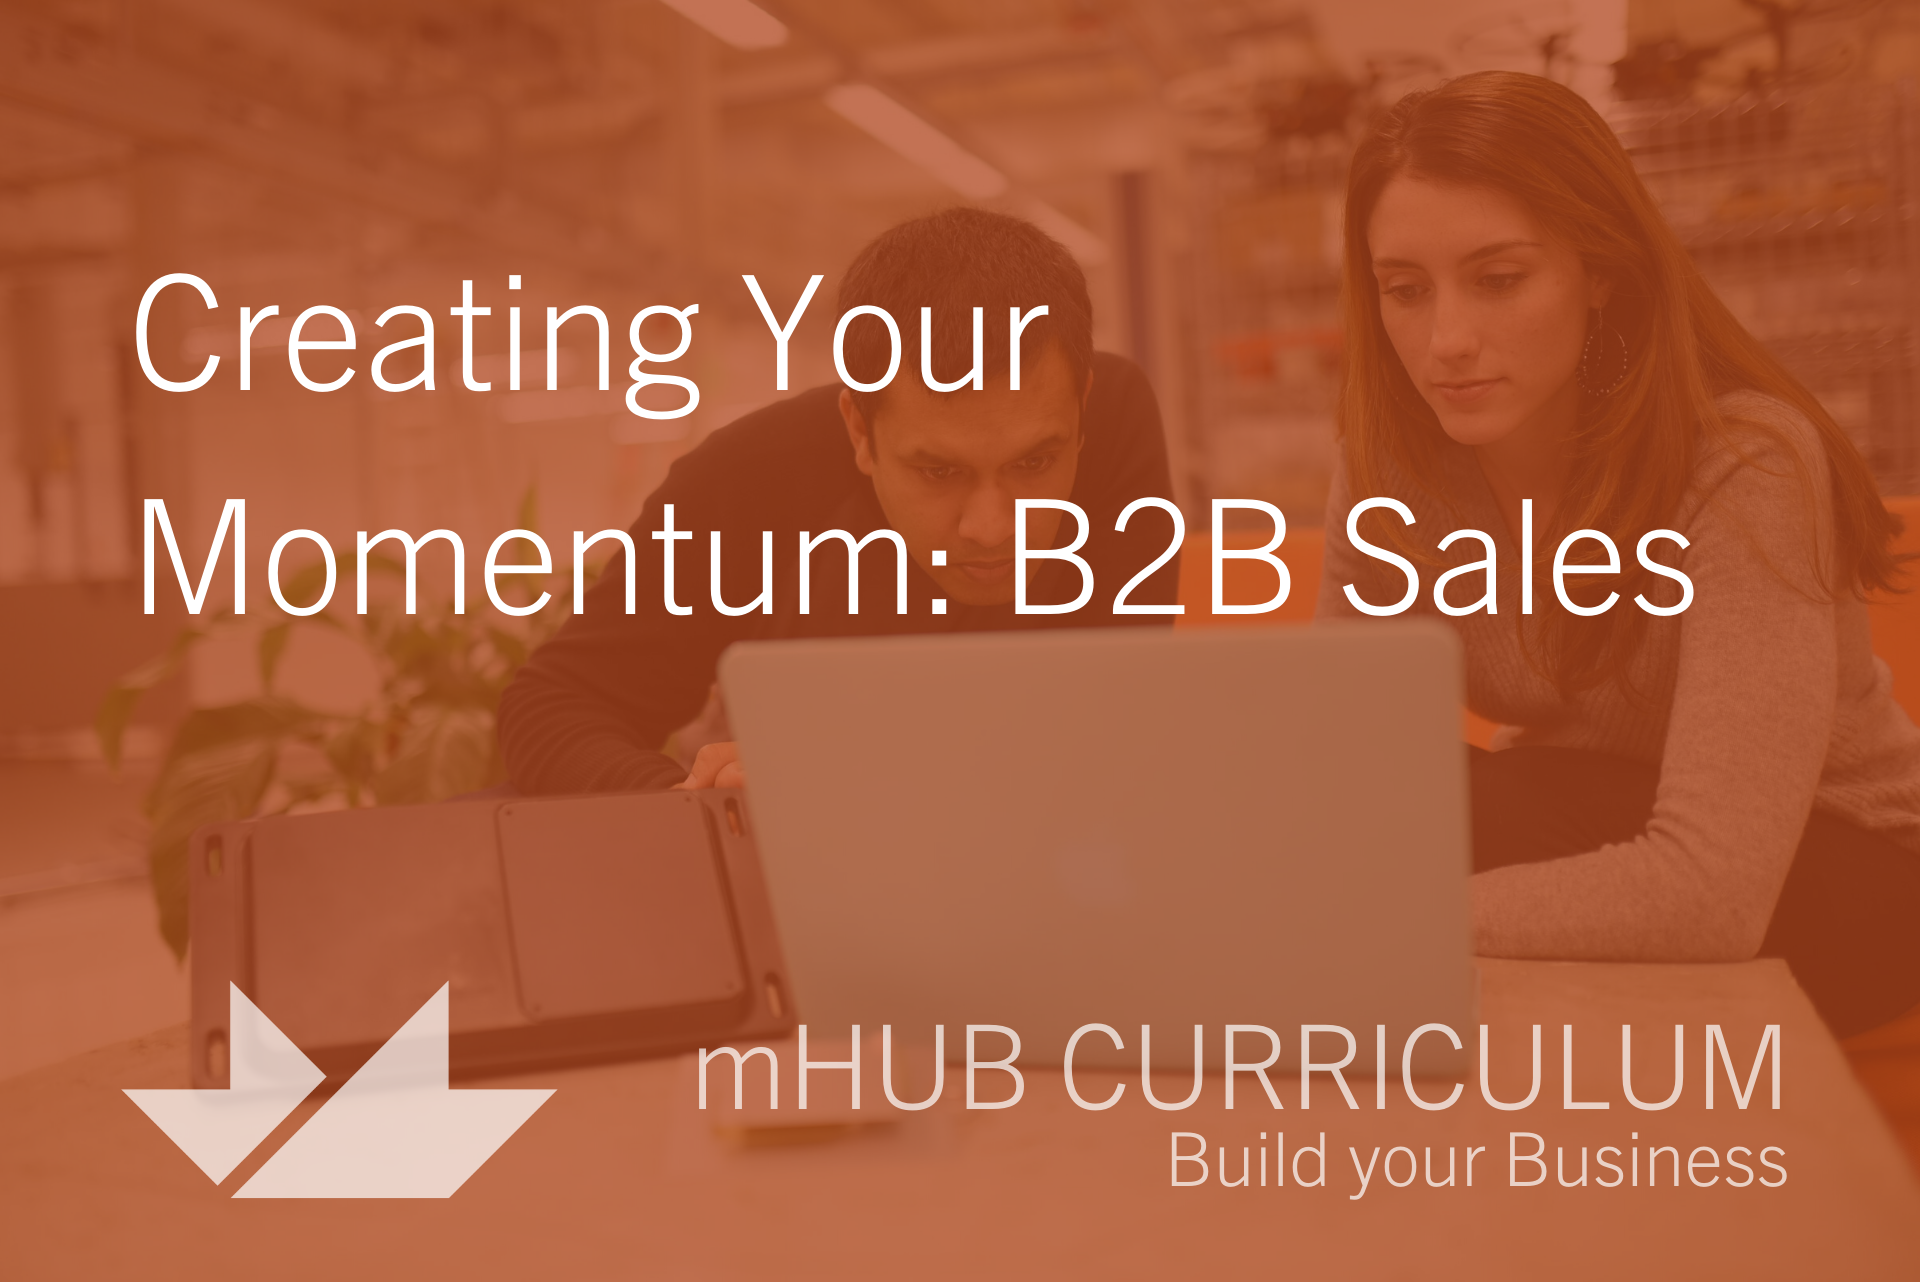 Creating Your Momentum: B2B Sales